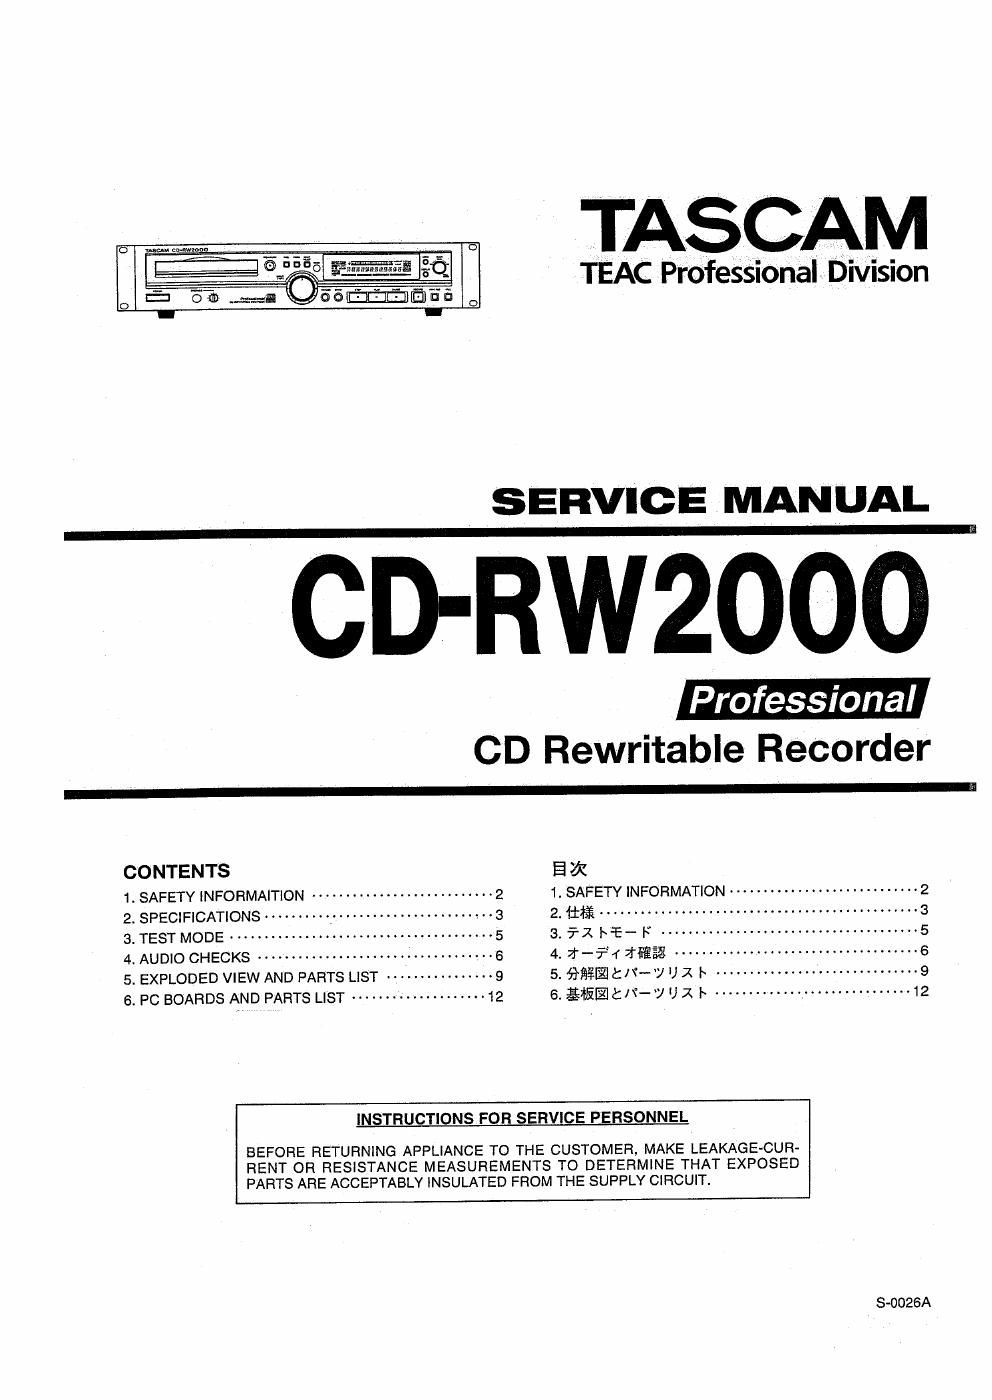 Tascam CD RW 2000 Service Manual